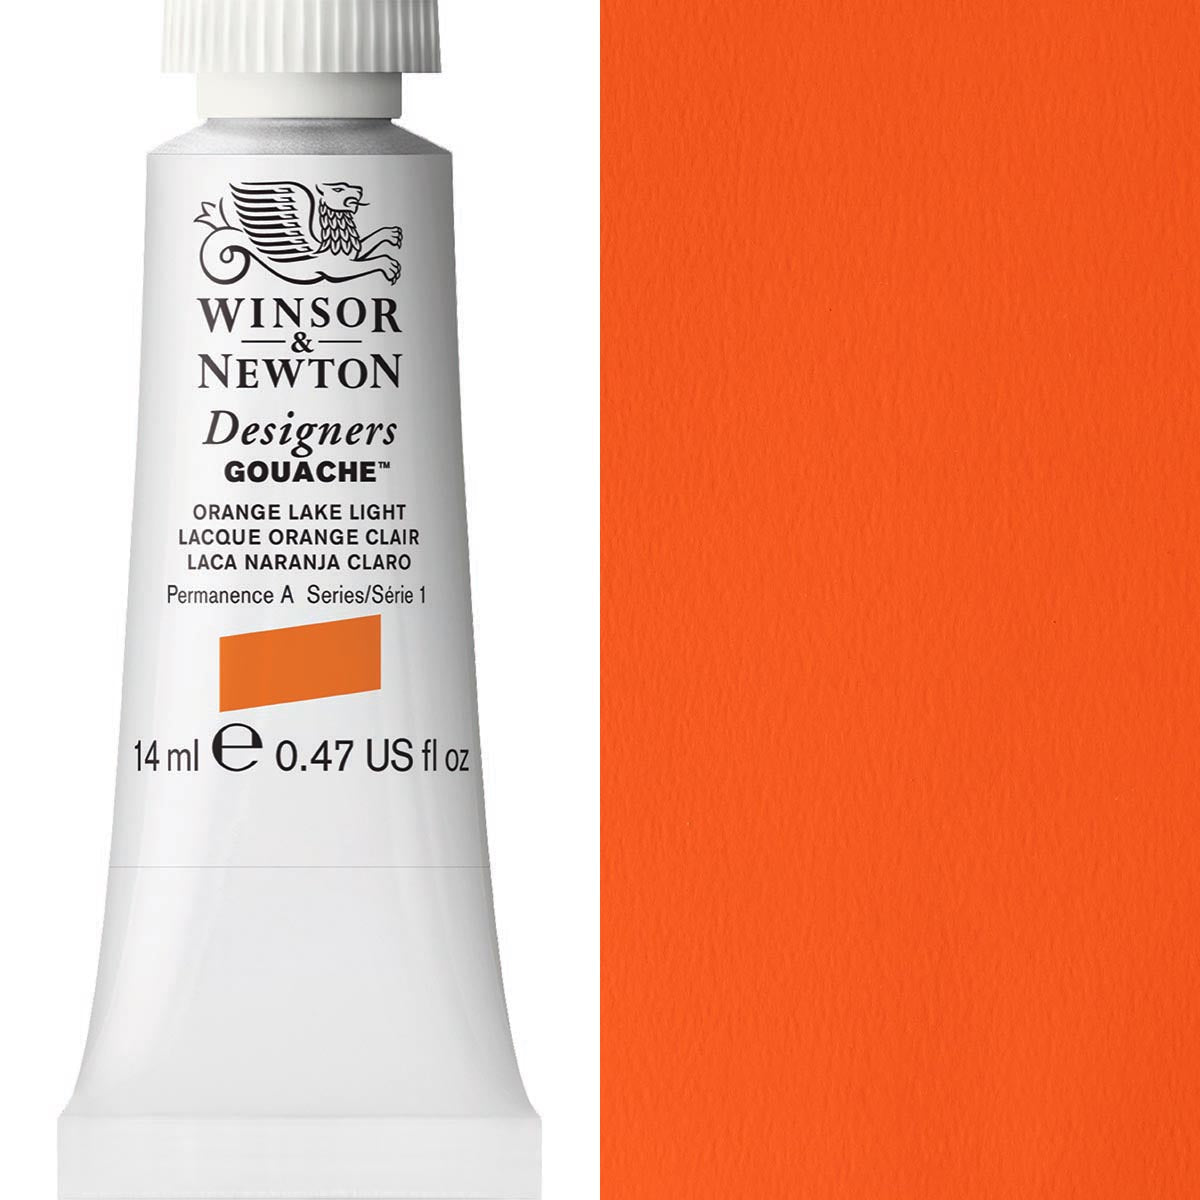 Winsor and Newton - Designers Gouache - 14ml - Orange Lake Light